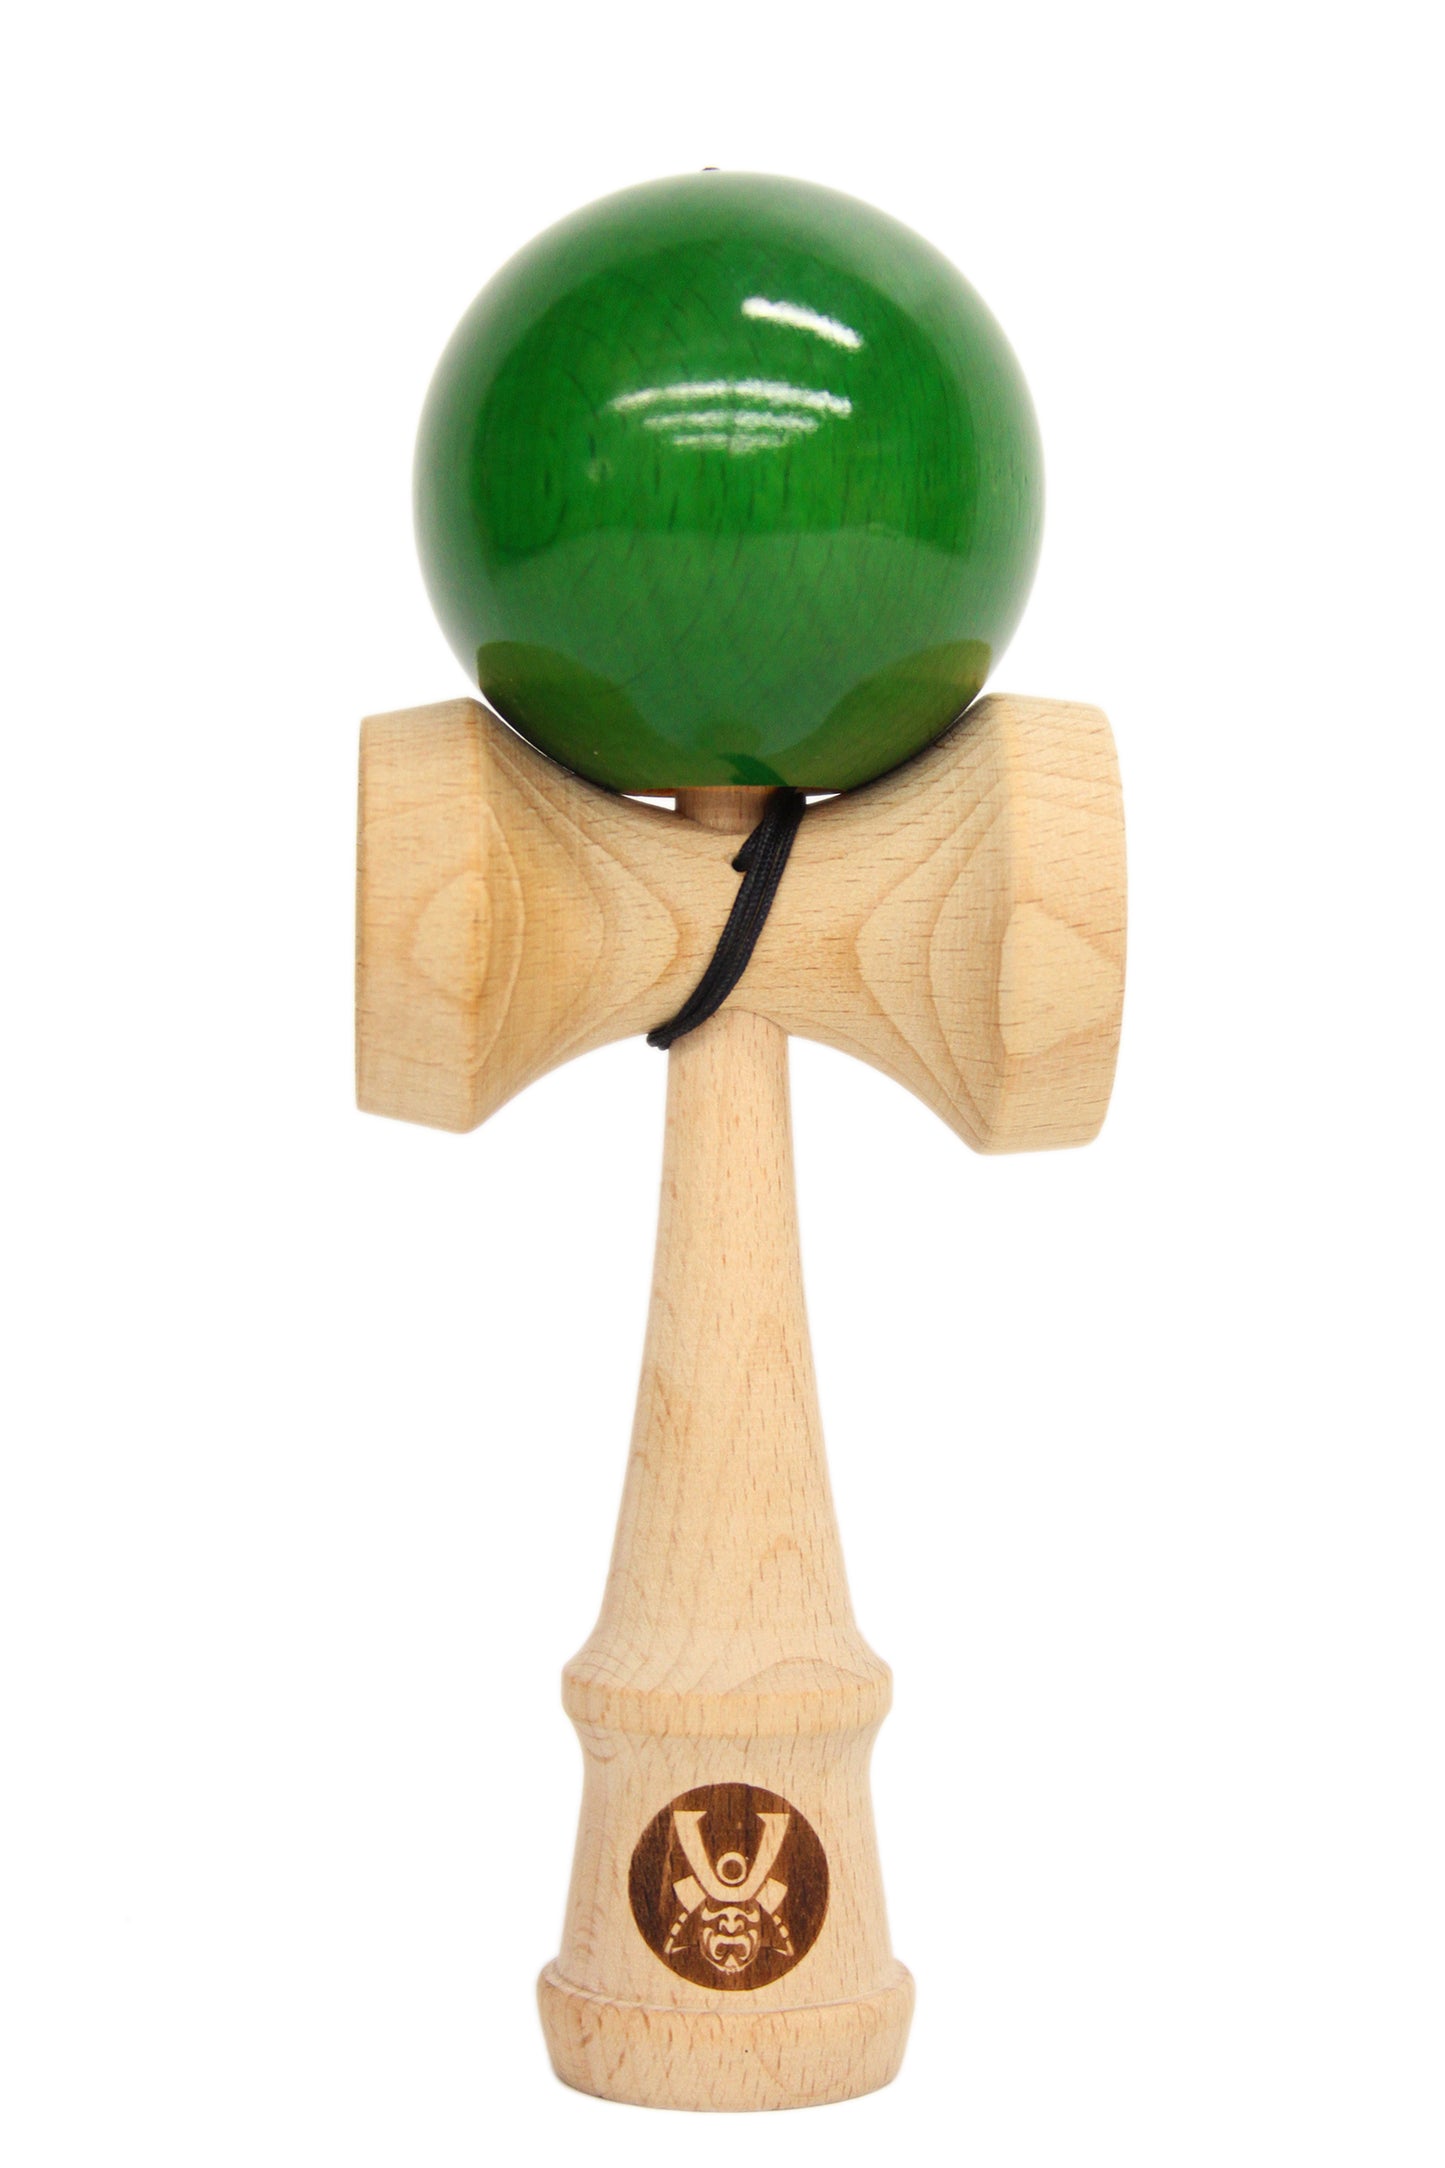 A natural light finished Bushido Kendama with Emearal green ball